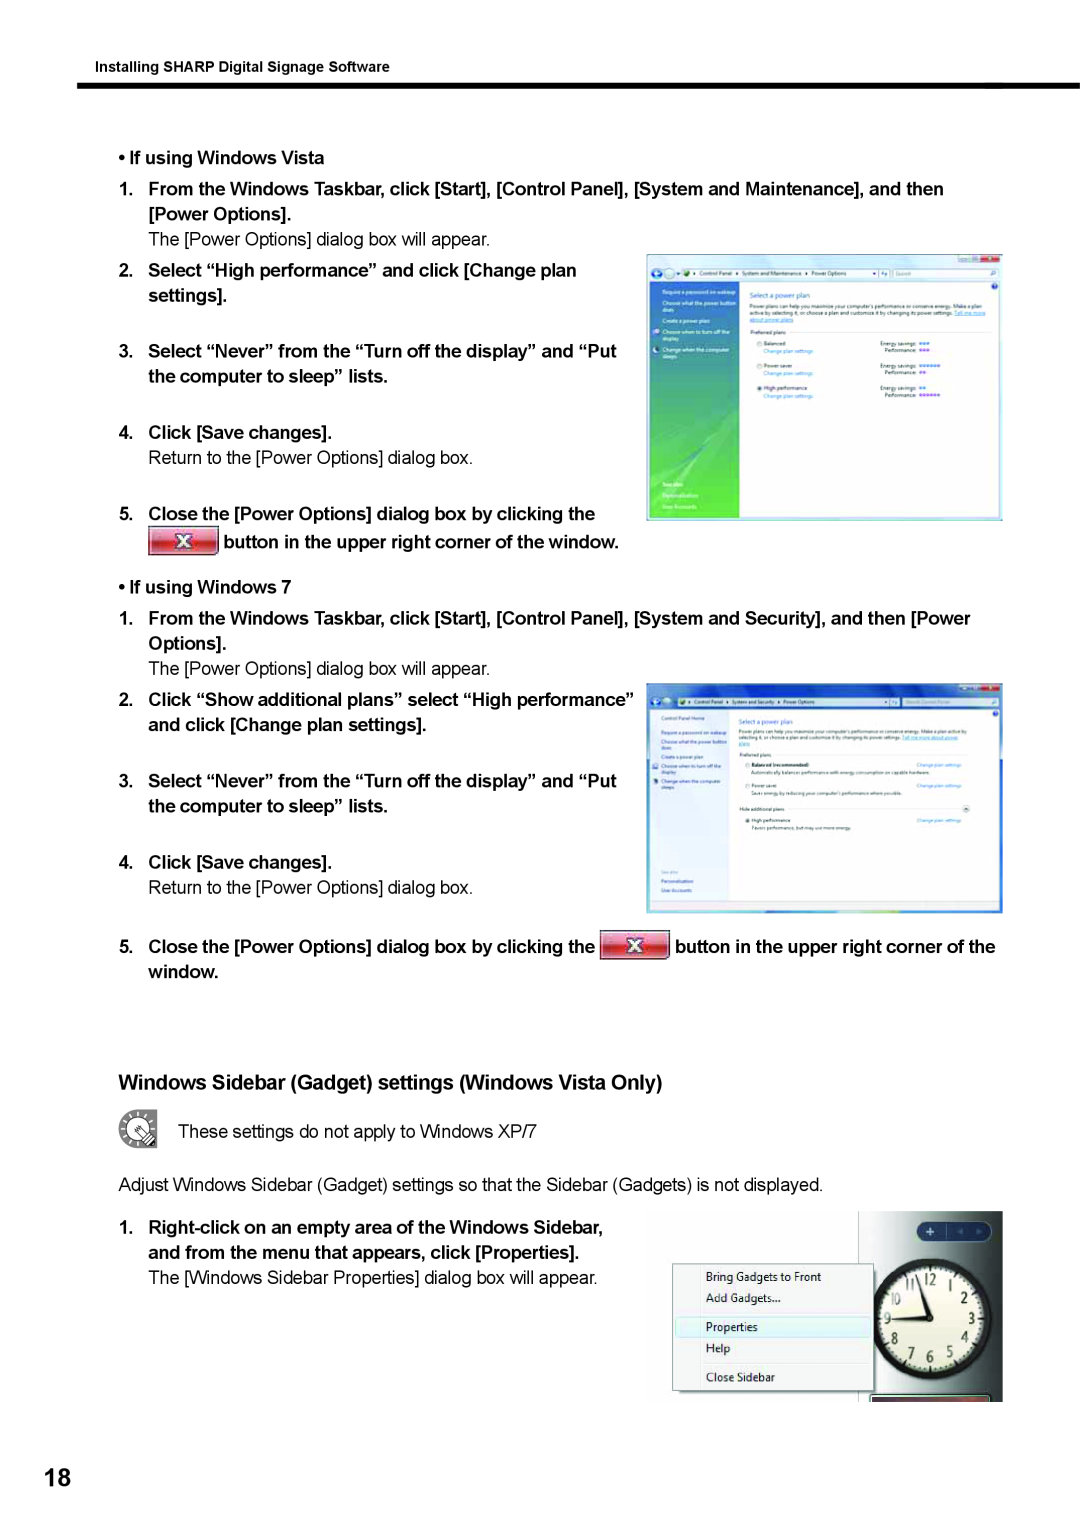 Sharp PNSV01 Windows Sidebar Gadget settings Windows Vista Only, If using Windows Vista, Click Save changes 